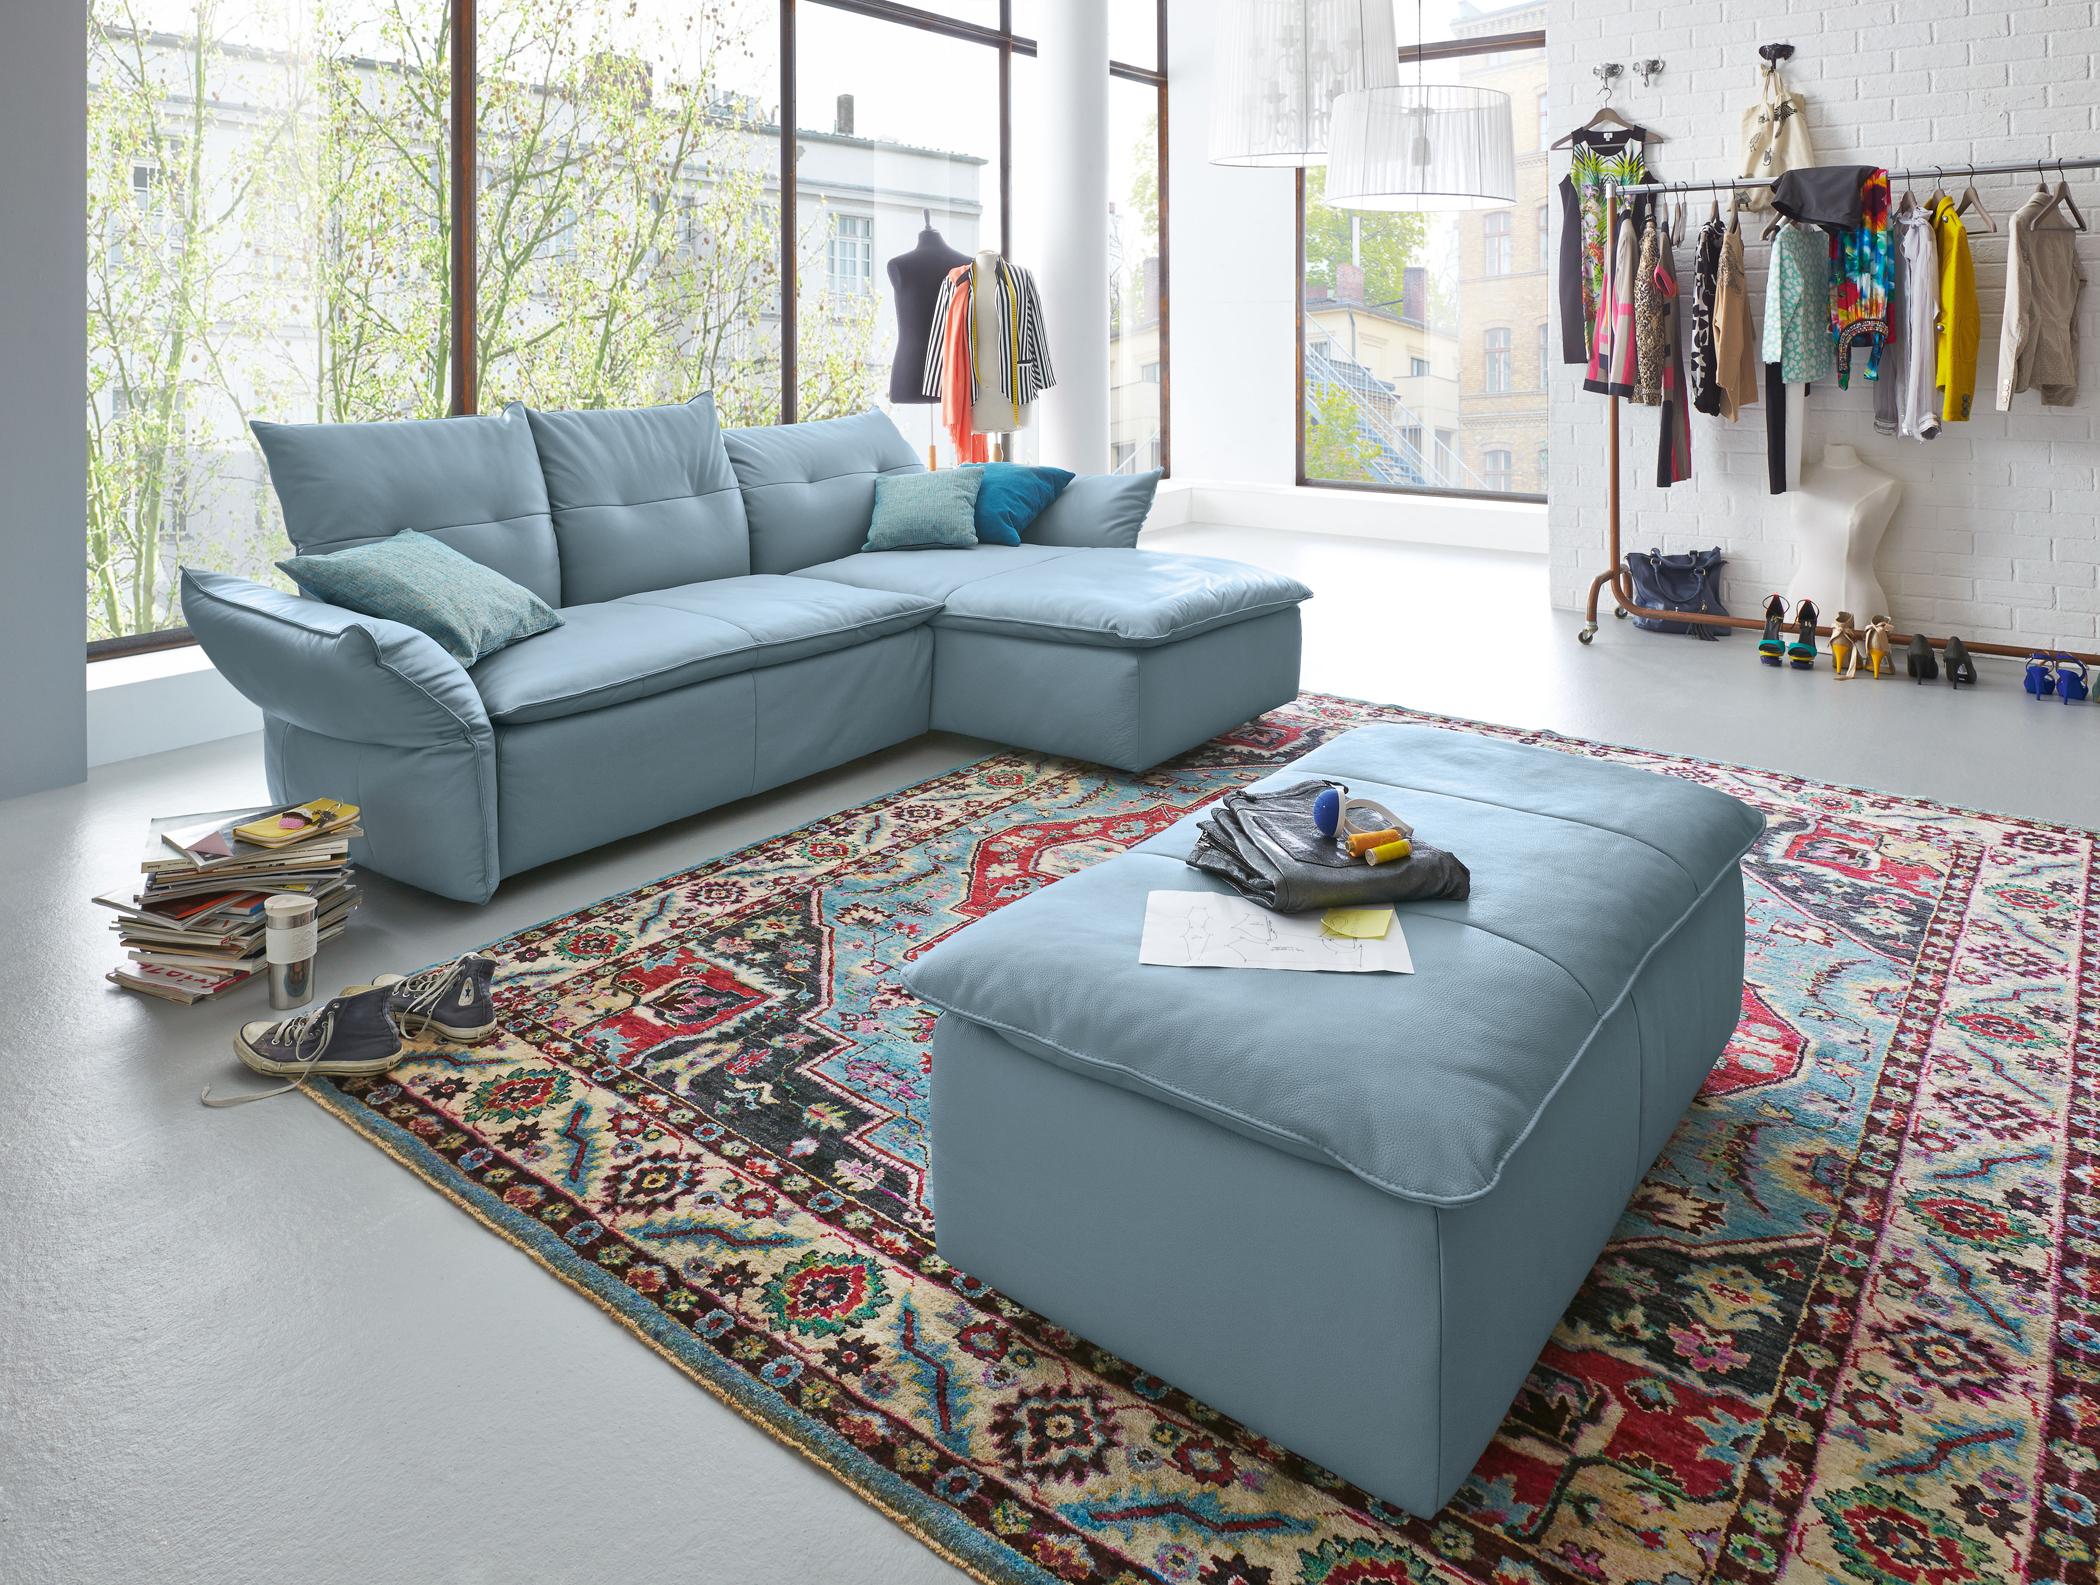 Sofa mit Hocker in Hellblau #fensterfront #hocker #sofa #blauessofa #hausgestaltung ©Musterring